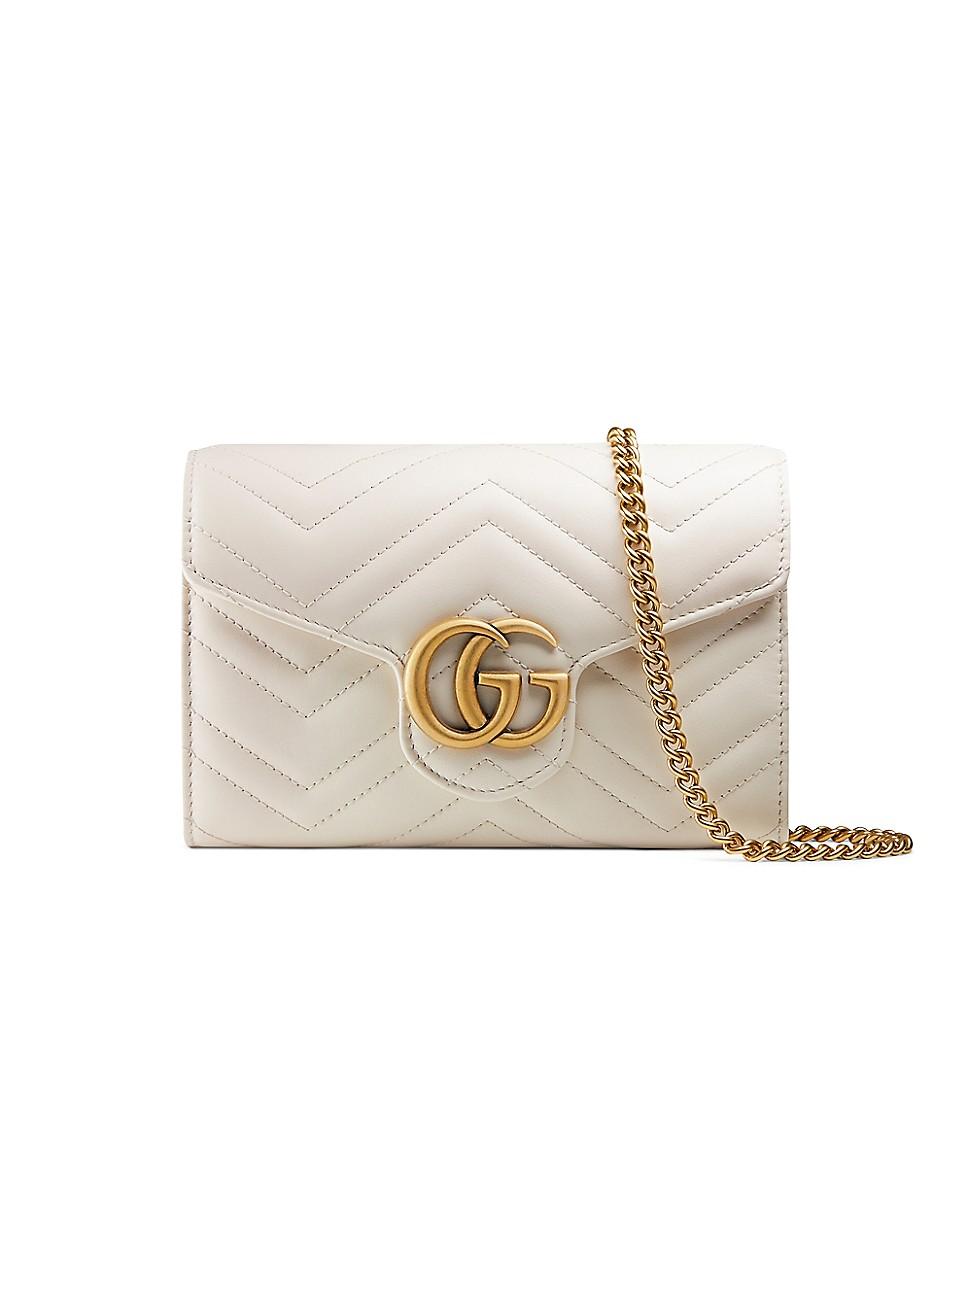 Gucci Leather GG Marmont Matelassé Mini Bag in White - Lyst